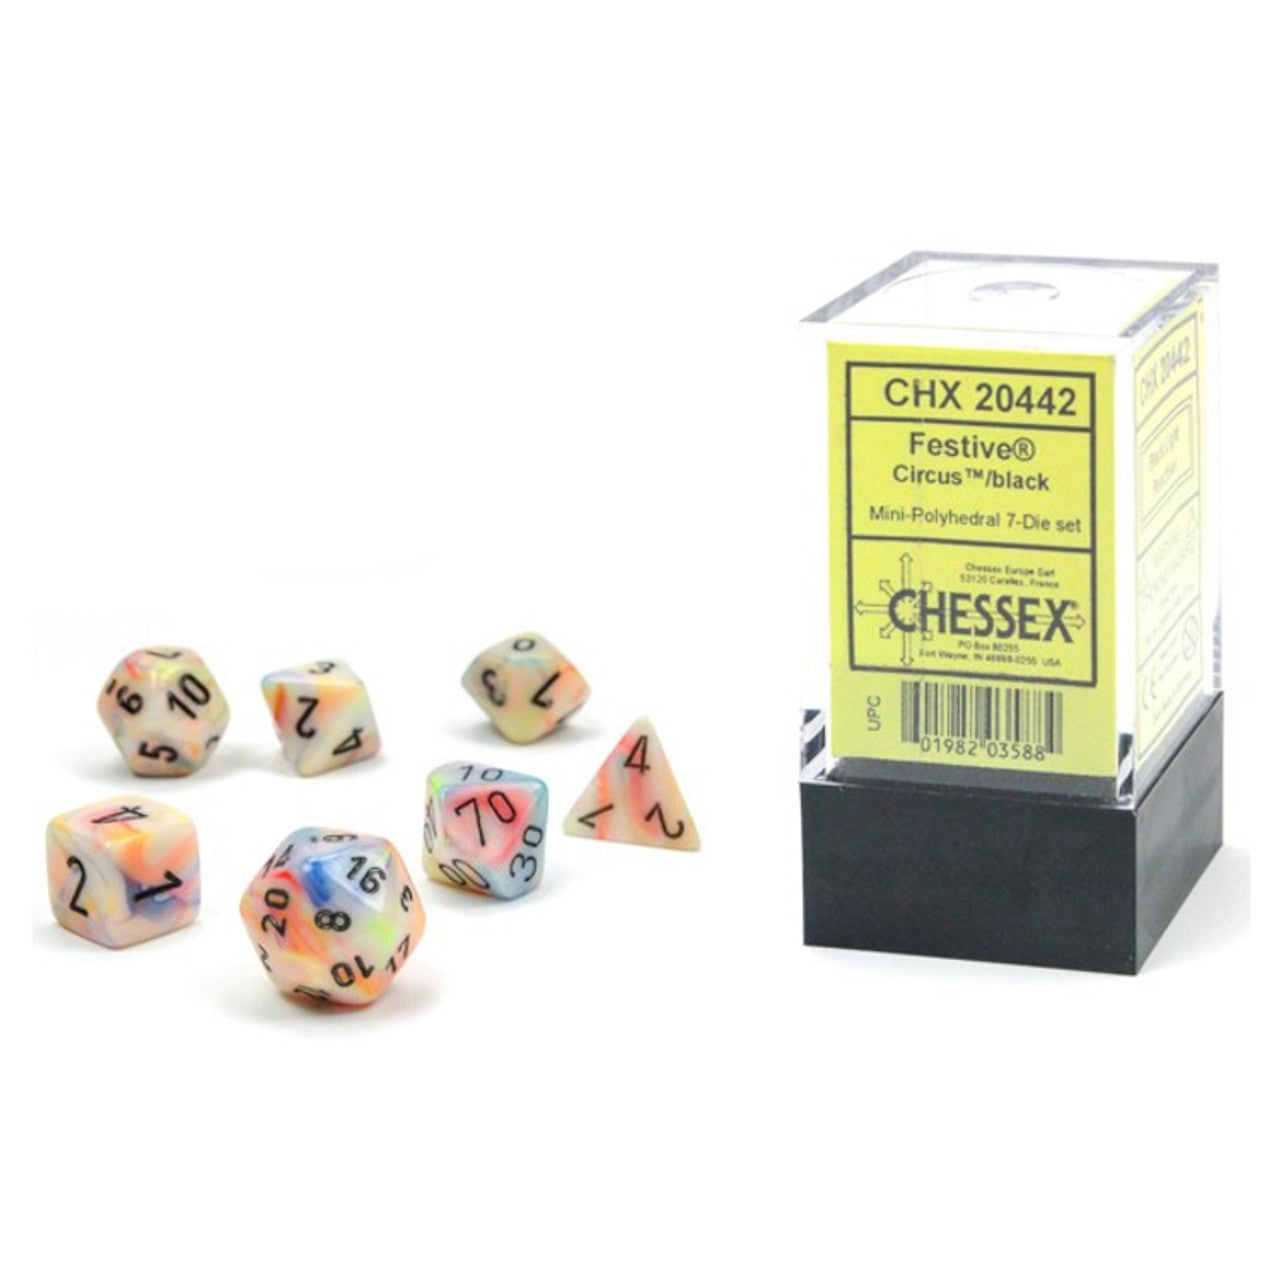 Chessex Dice: Festive - Mini Polyhedral Circus/Black (7)